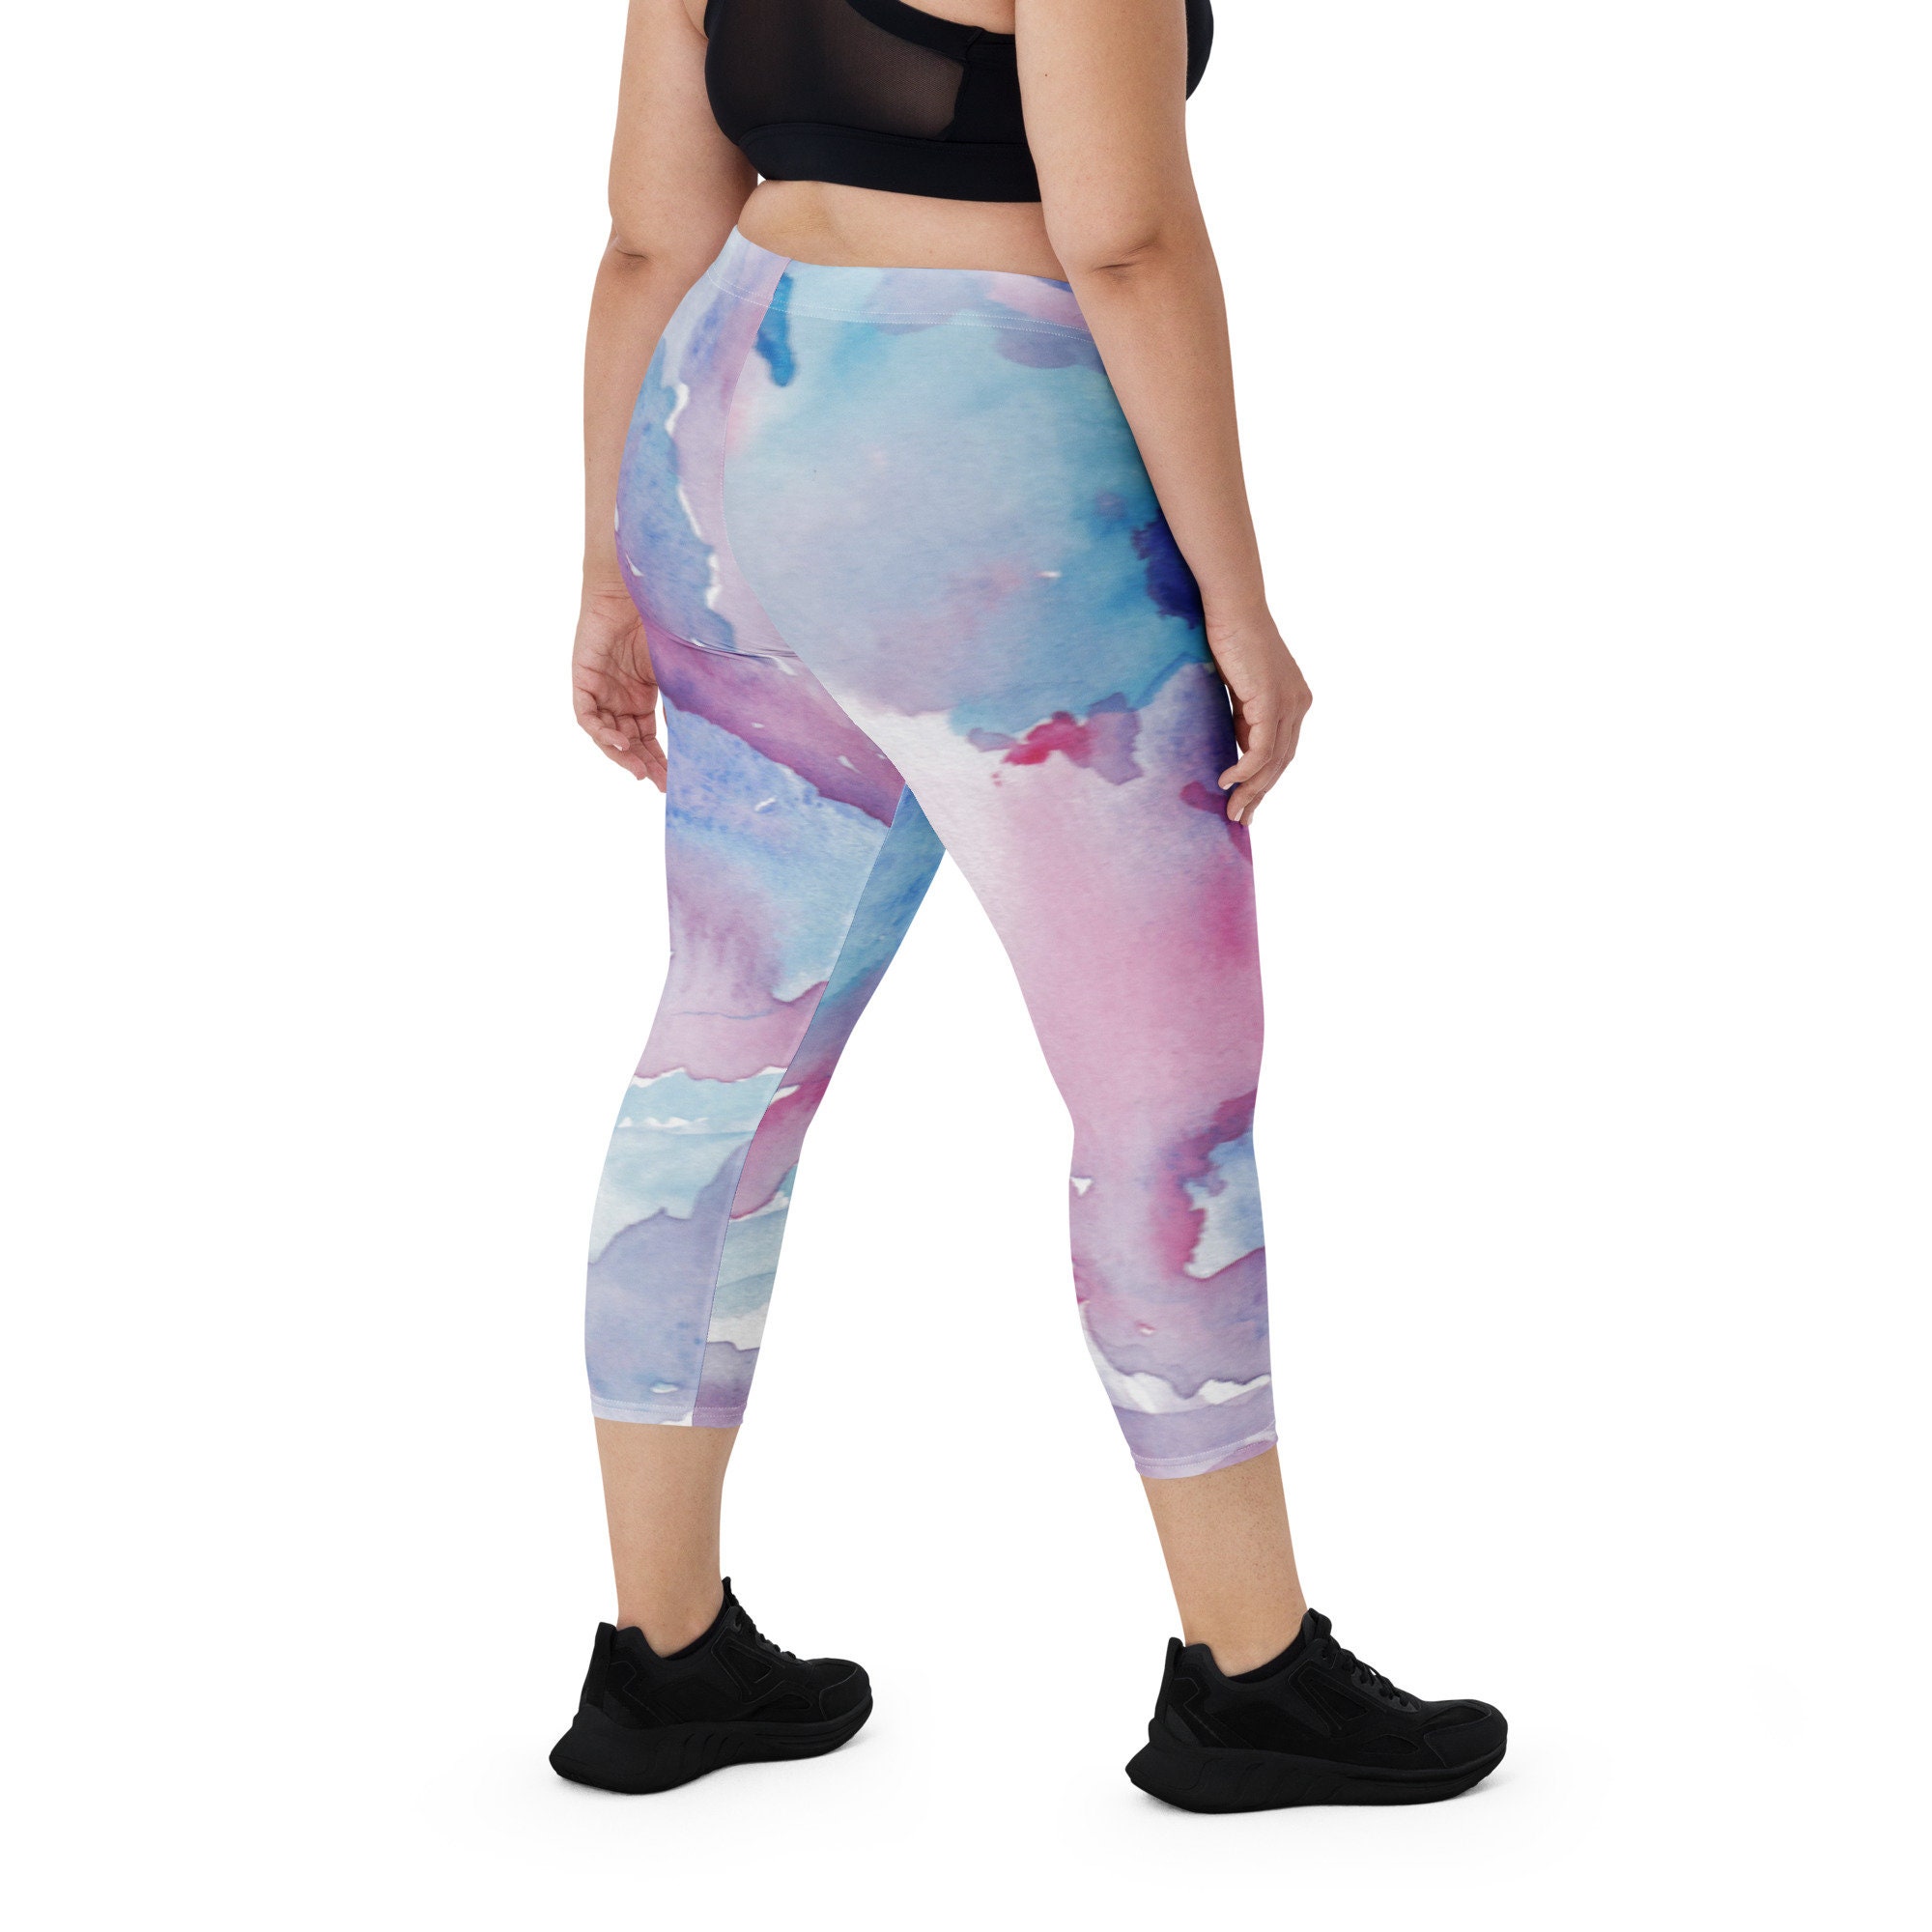 Buy Painted Capri Gym Leggings for Women, Workout Leggings Quick